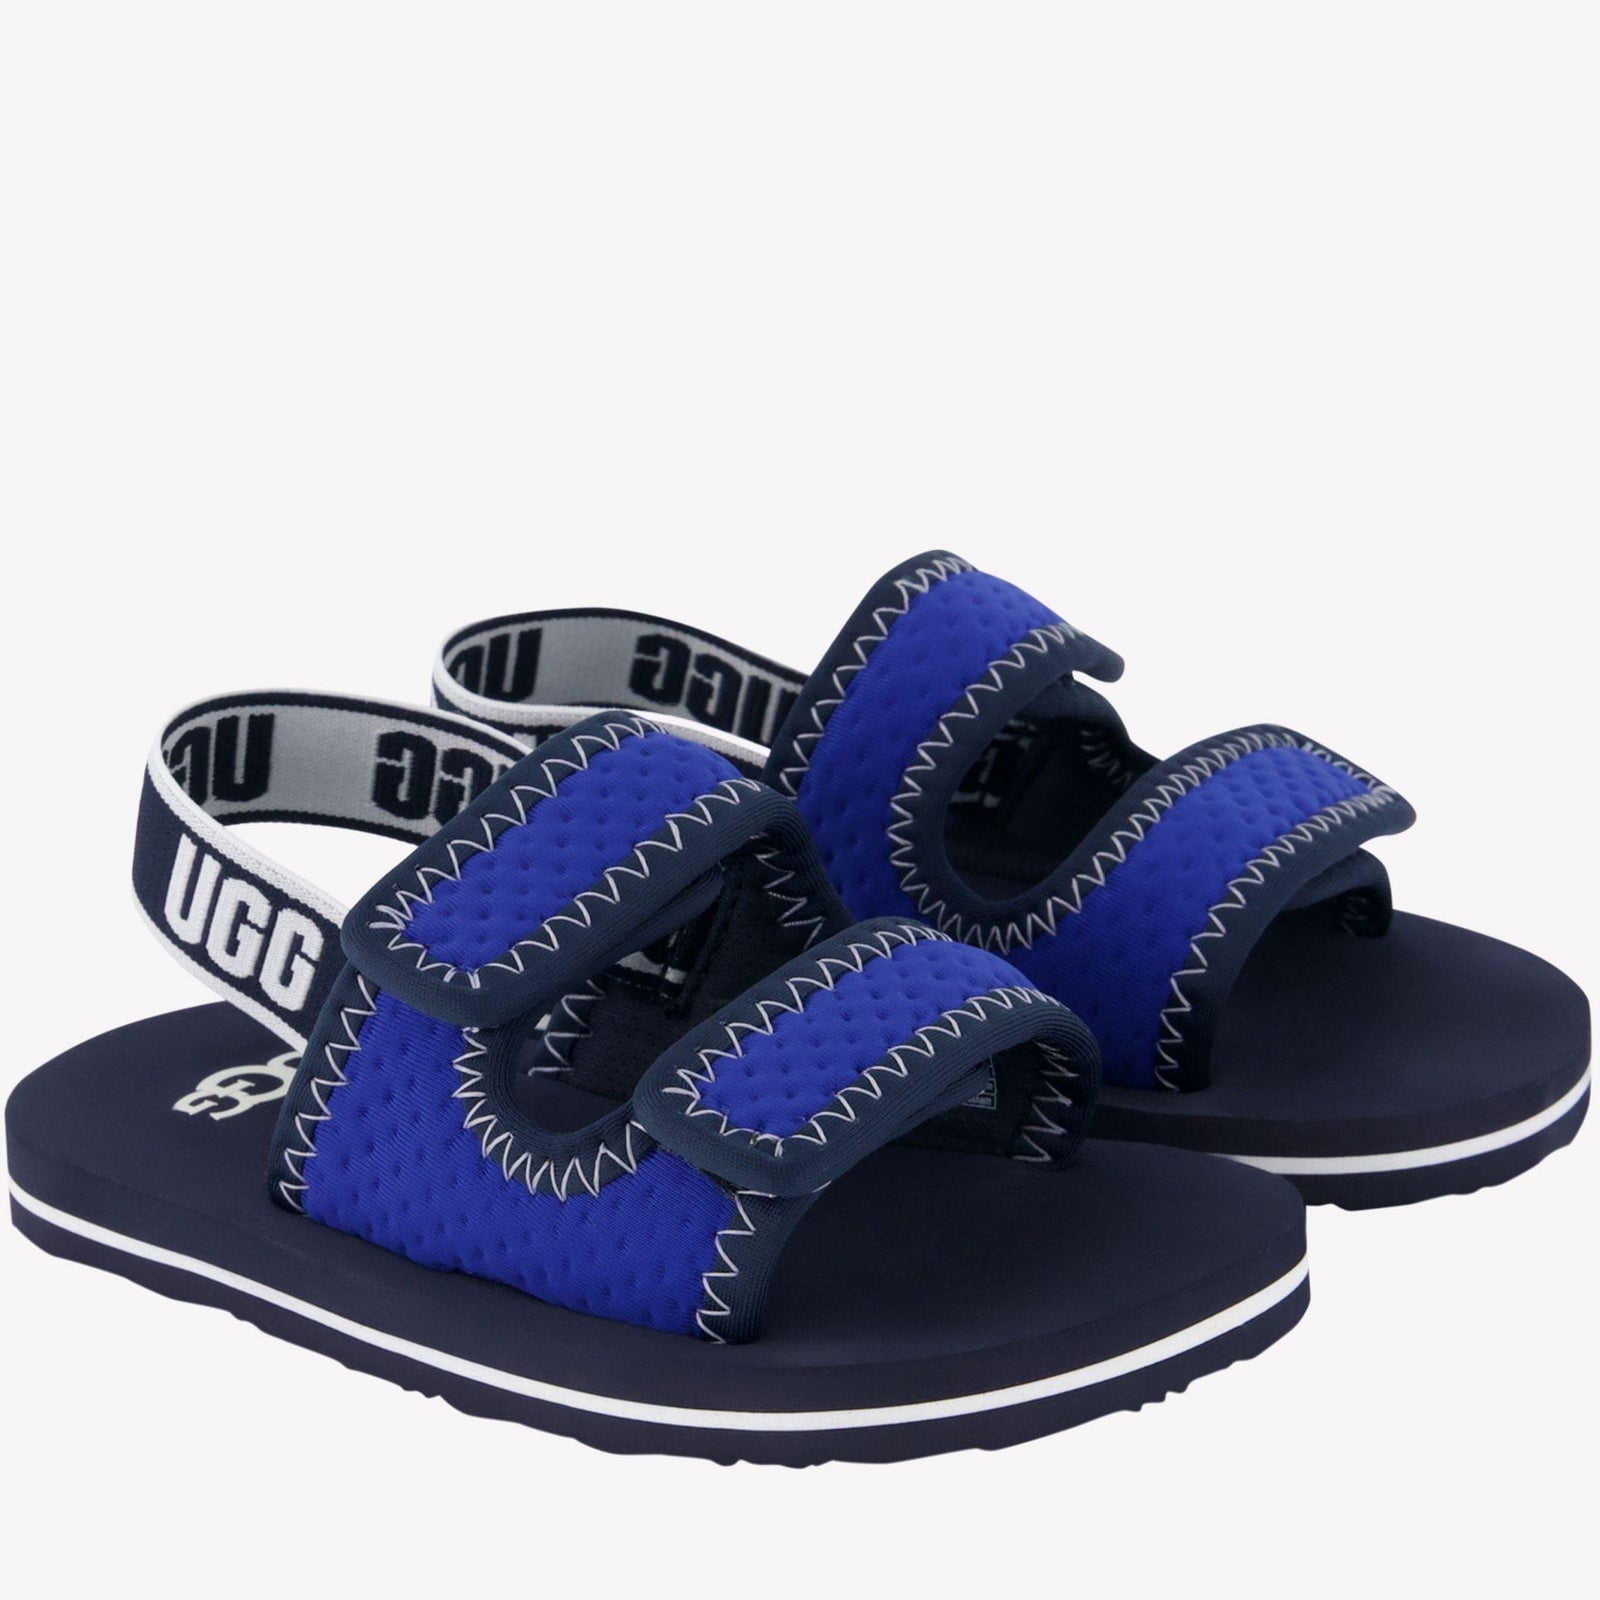 UGG Kinder Unisex Sandalen Blauw 22